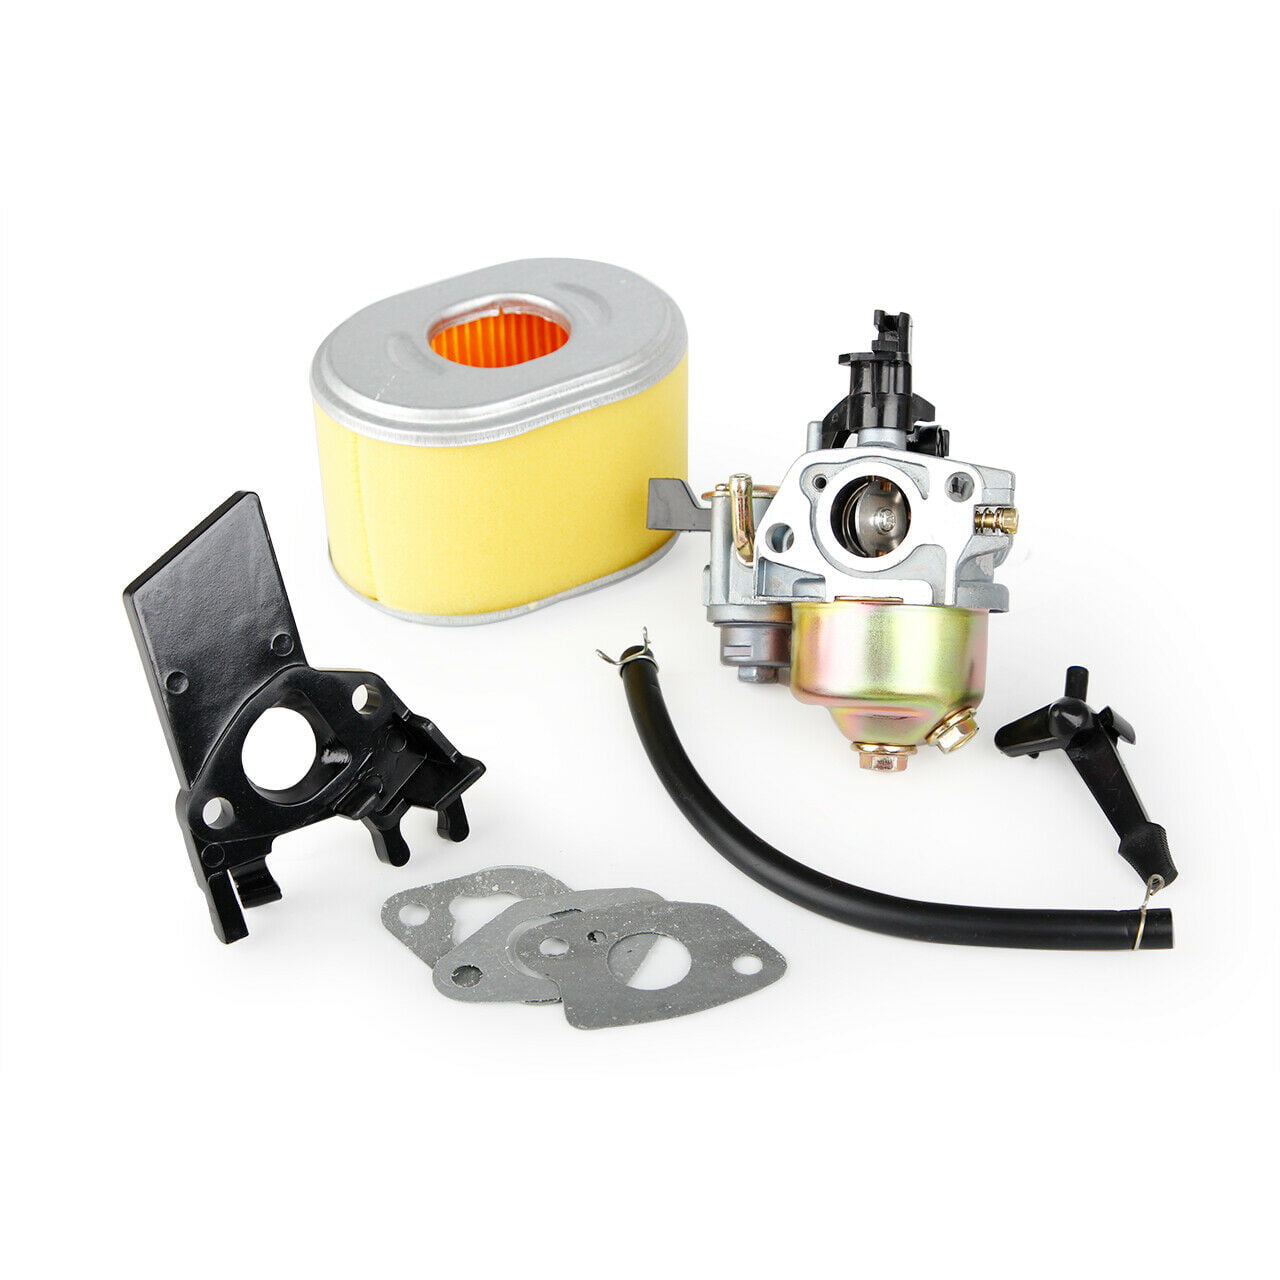 Carburetor Air Filter Carb Kit For Honda GX160 GX140 GX168 GX200 5.0/5.5/6.5HP 